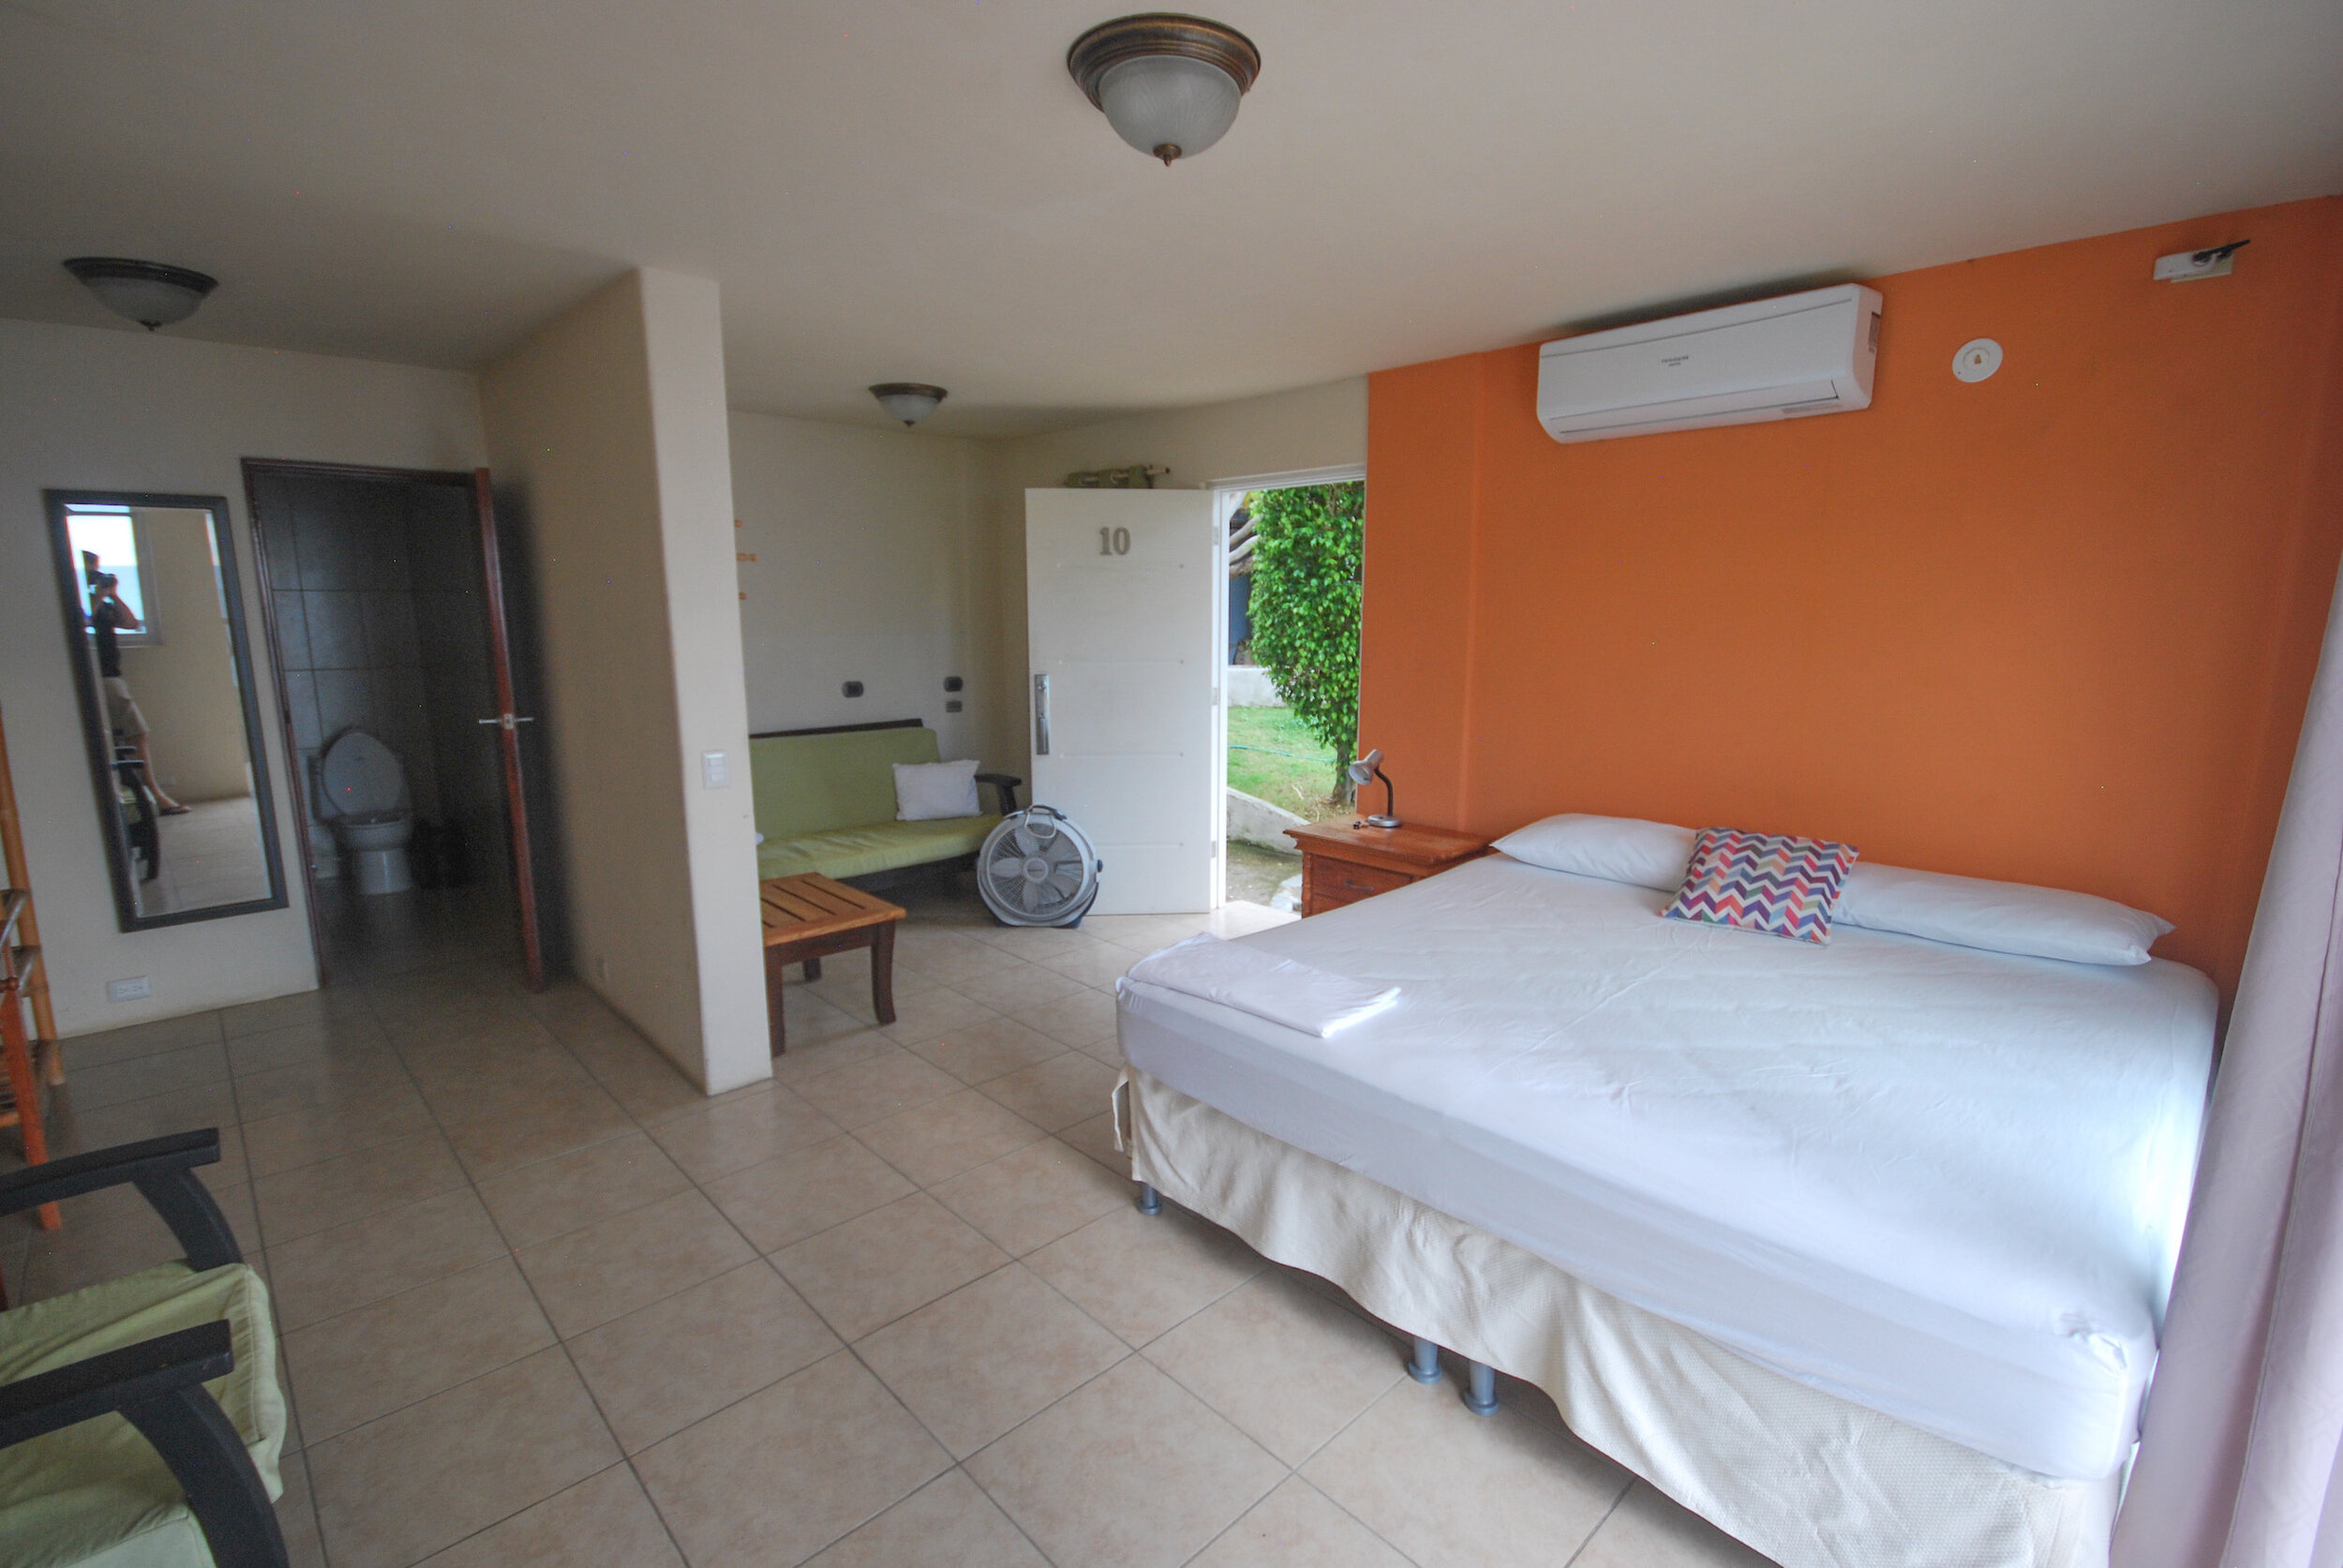 Hotel Resort For Sale San Juan Del Sur Nicaragua 23.JPEG